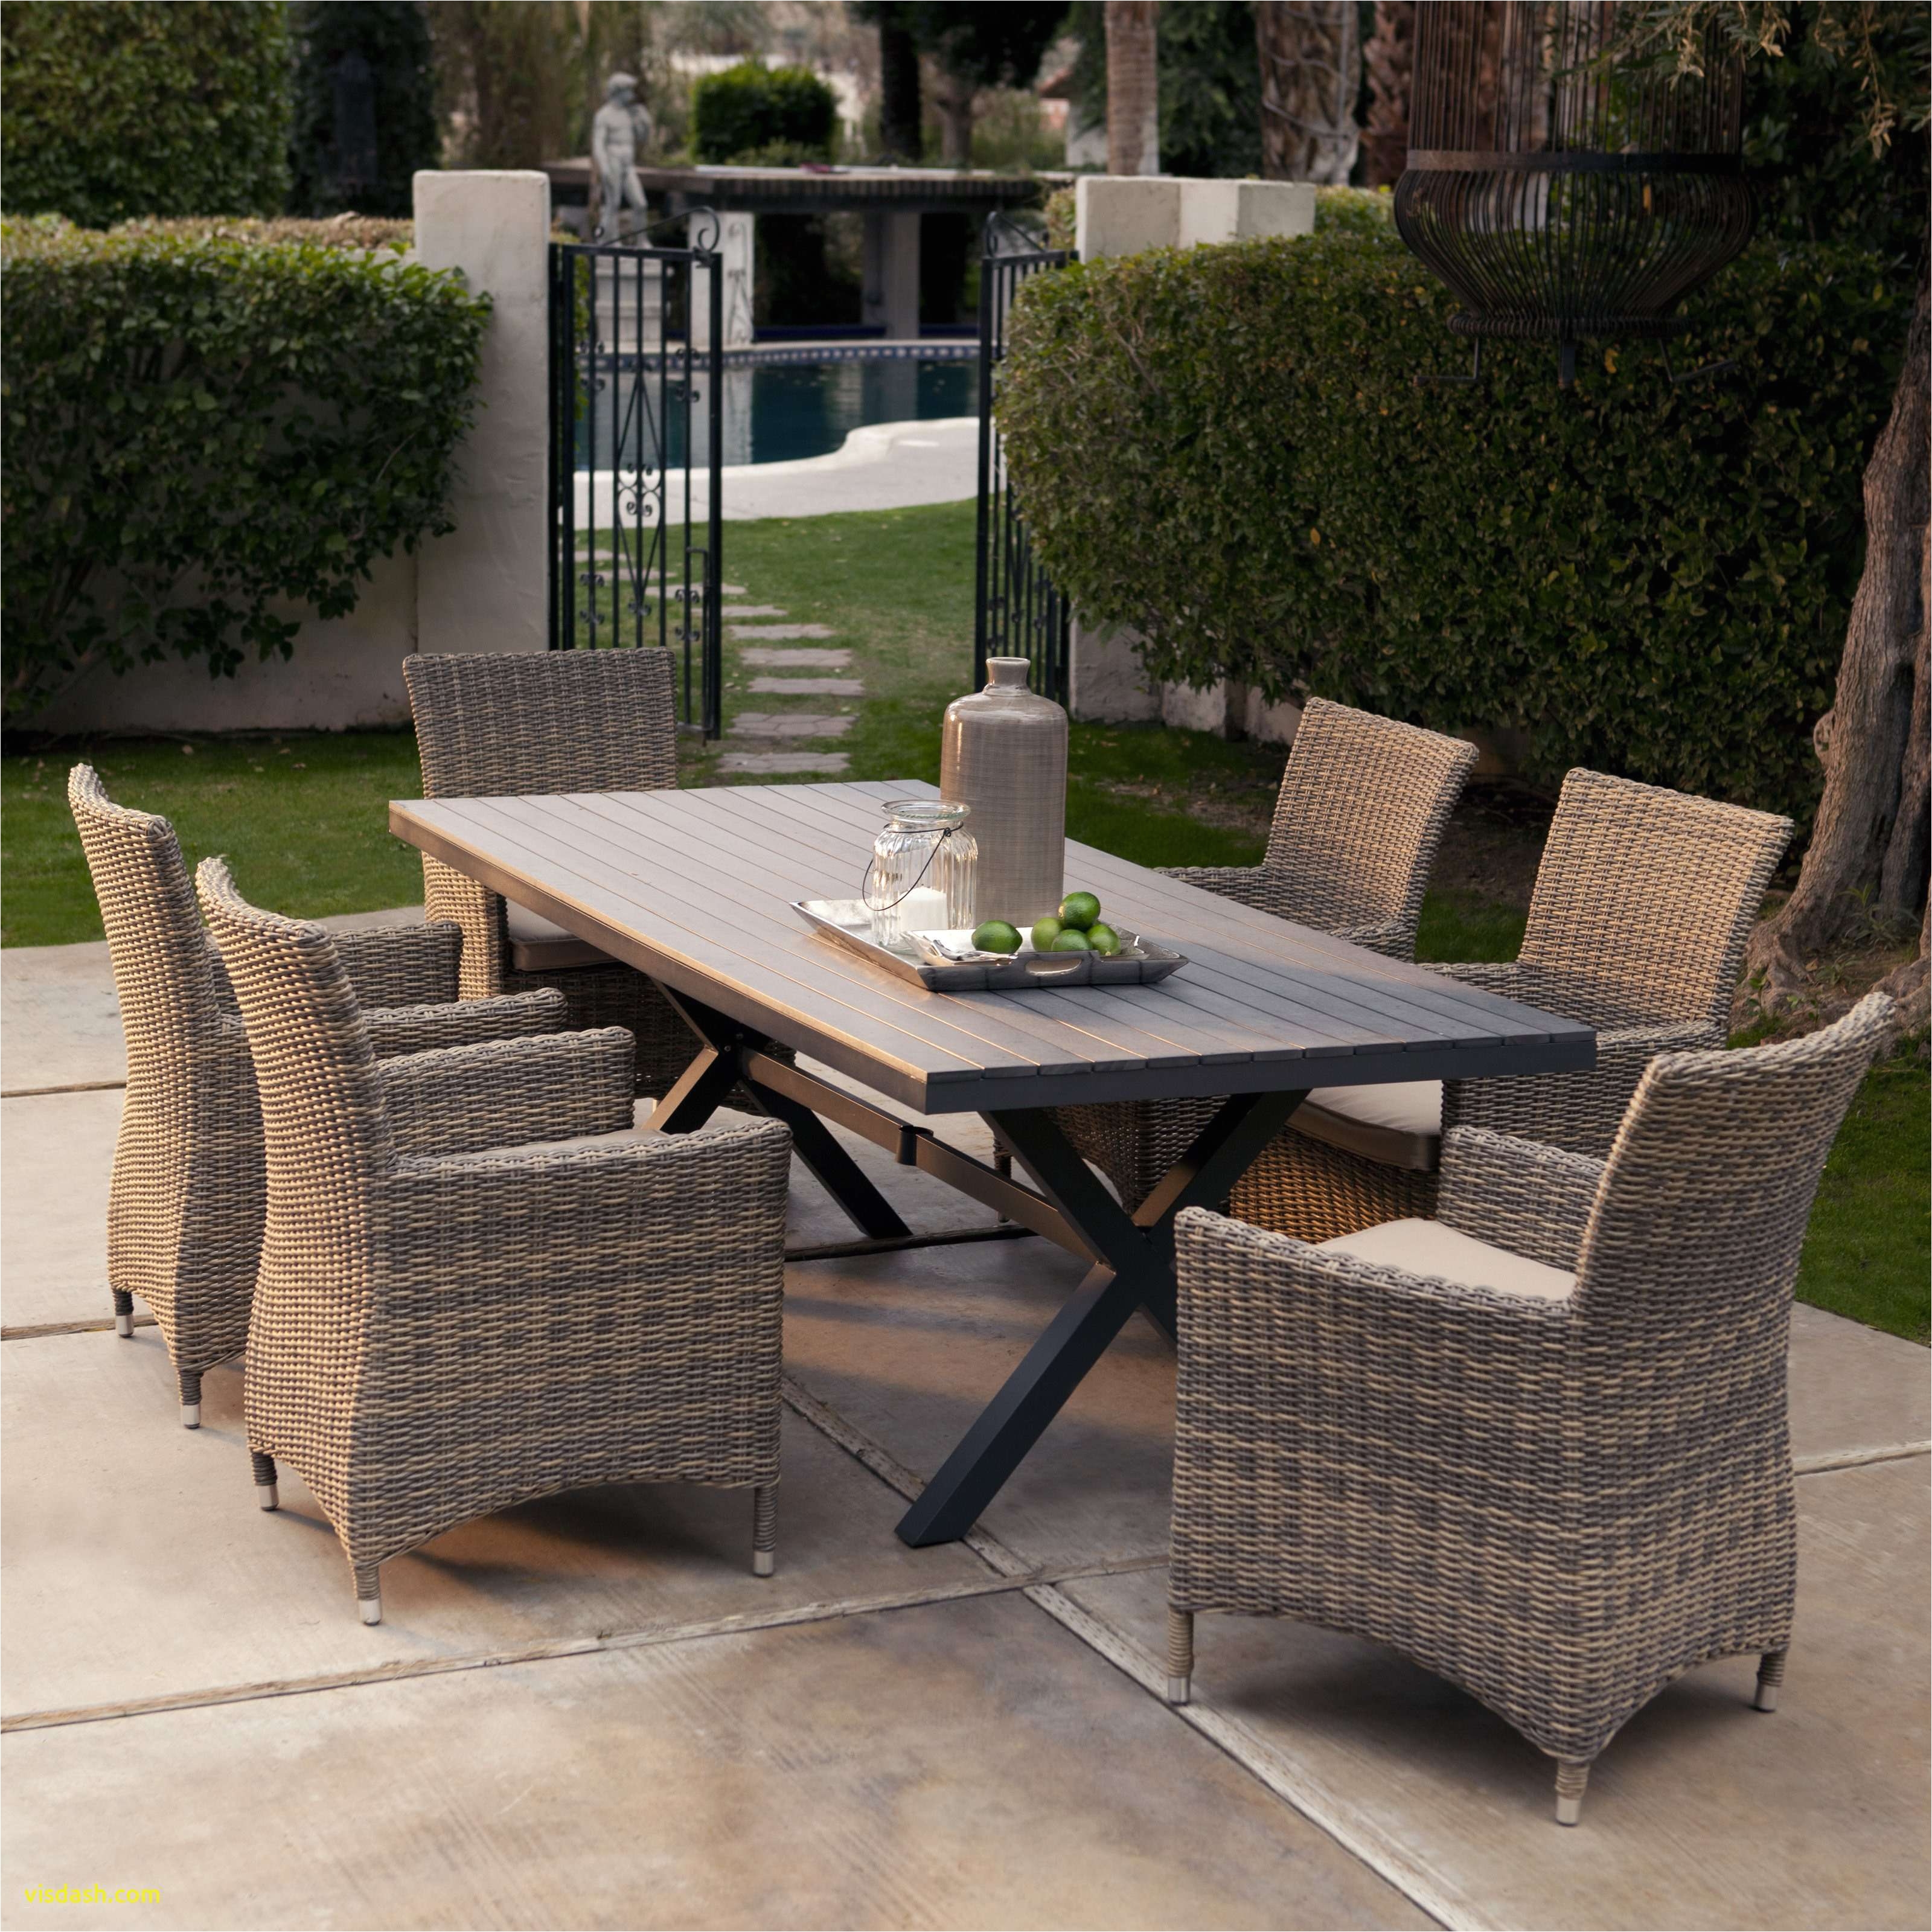 resin outdoor furniture luxury chair outdoor patio furniture marvellous wicker outdoor sofa 0d